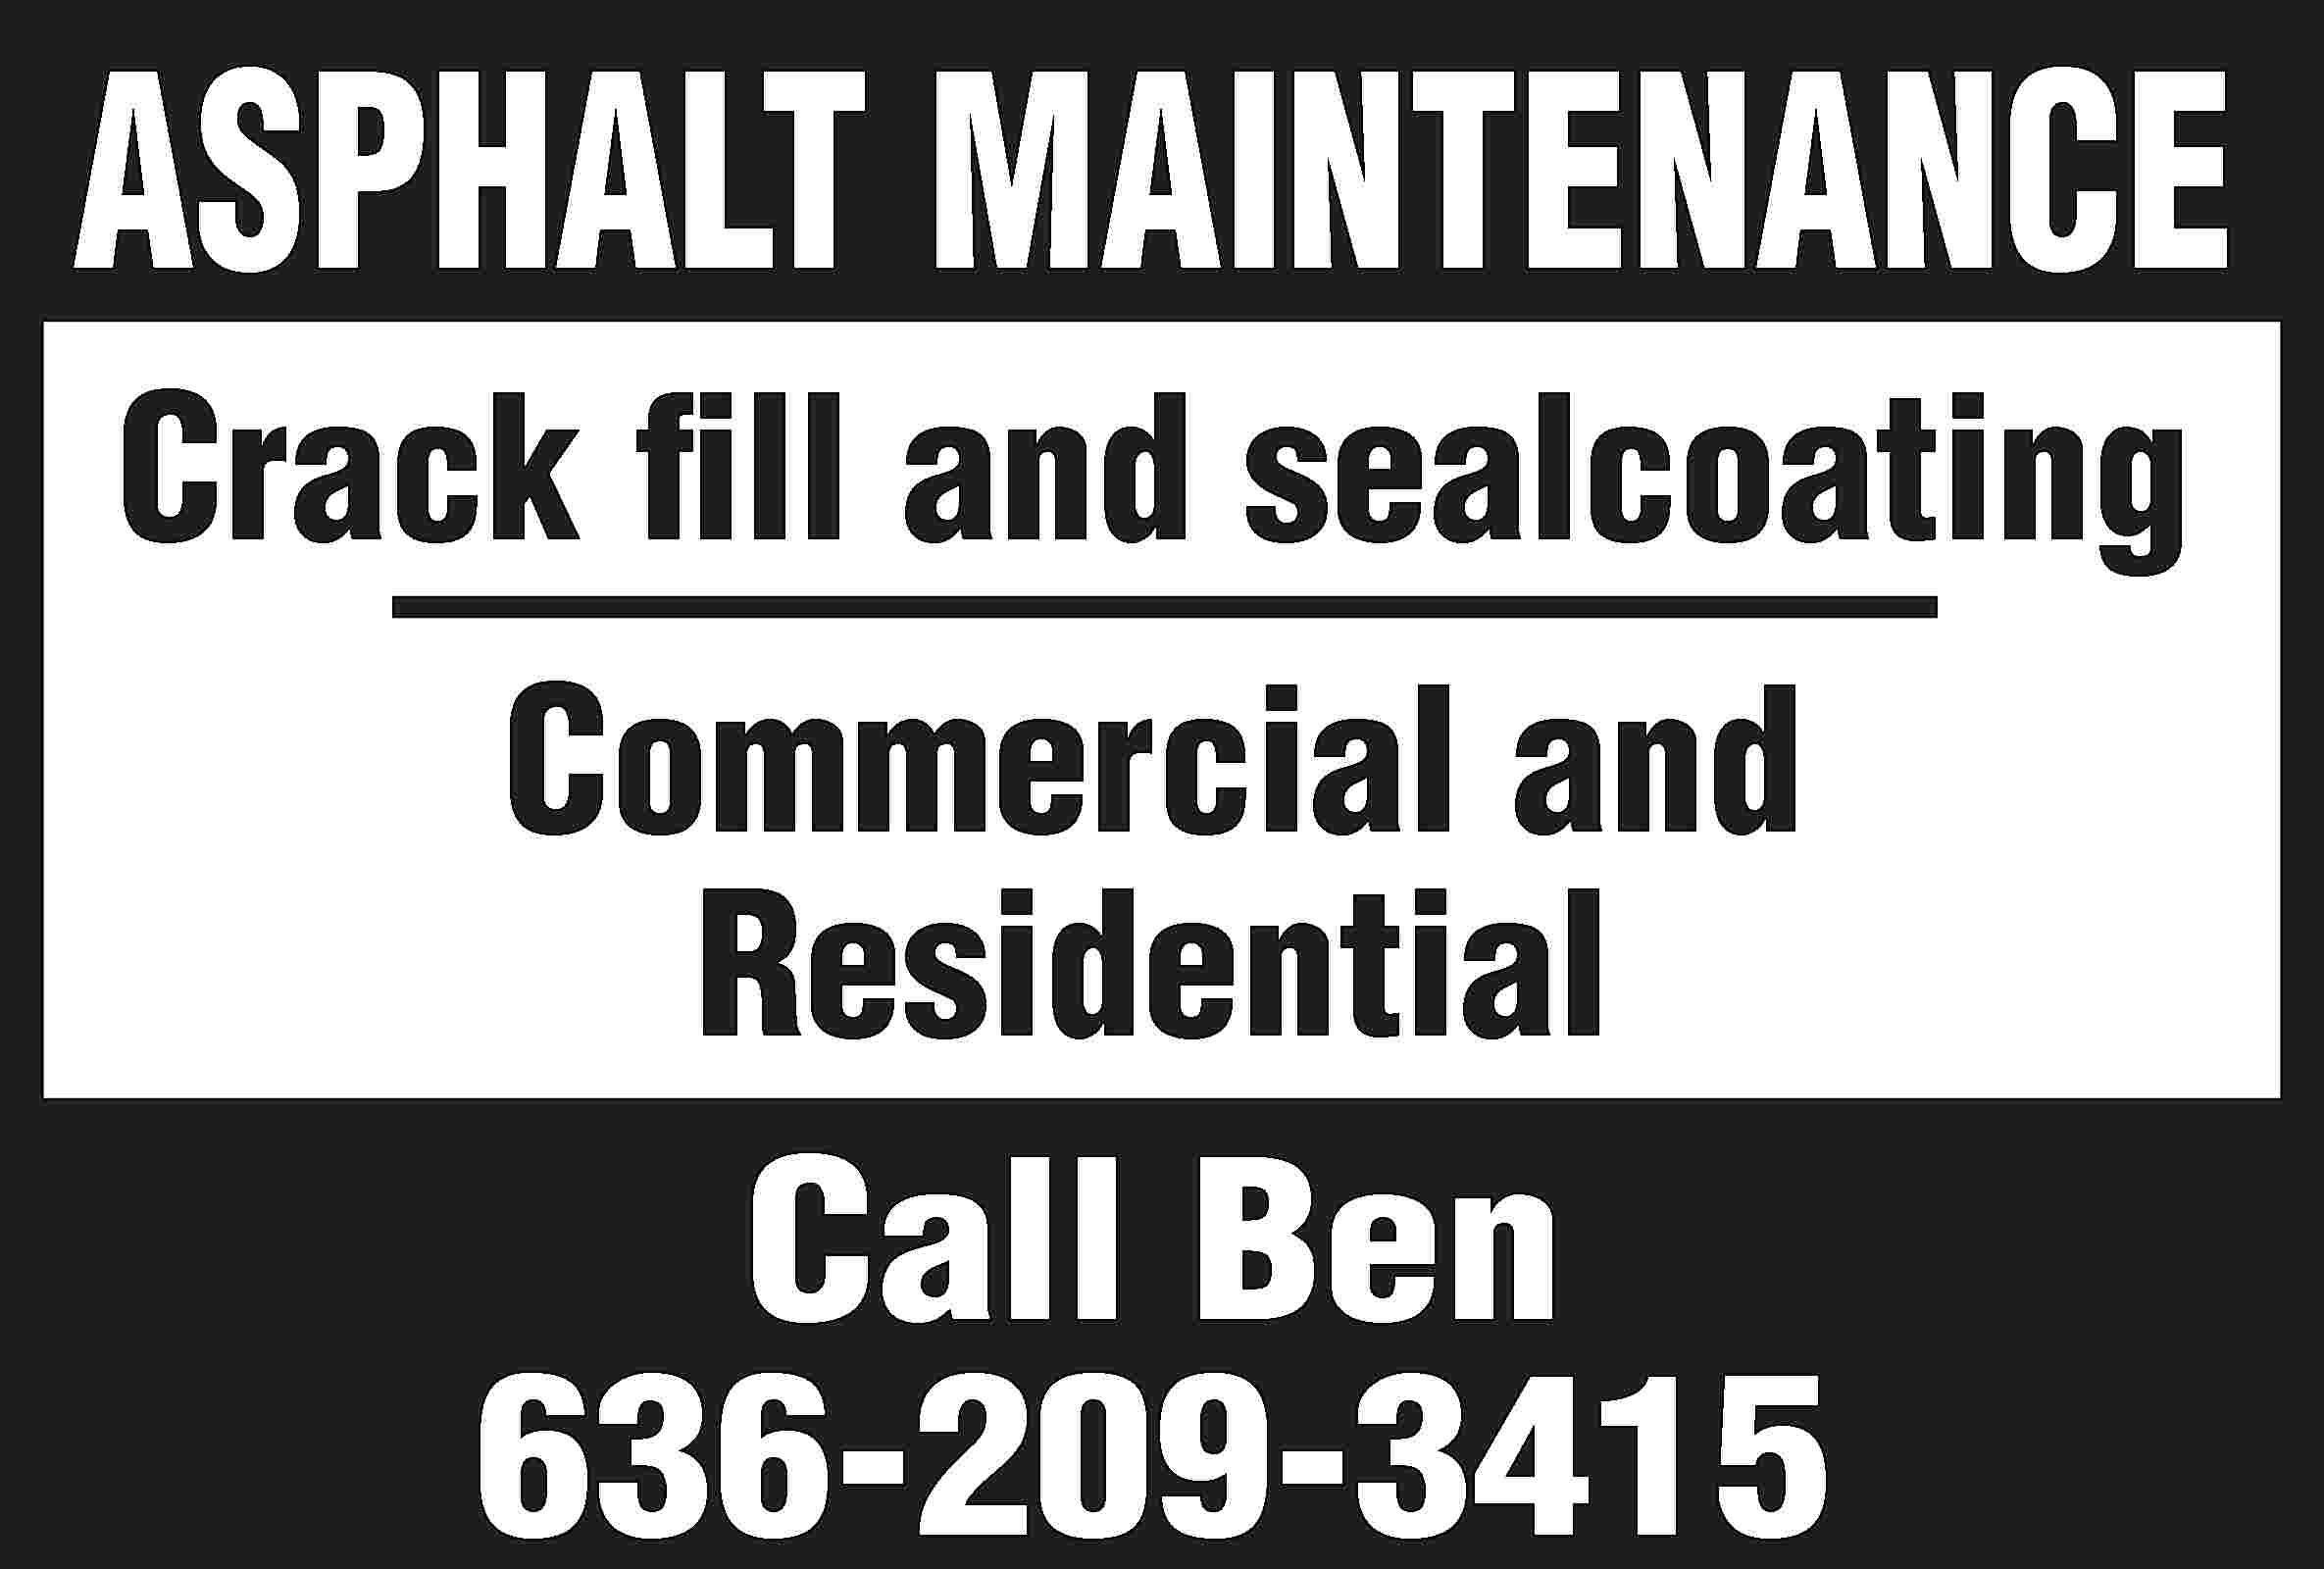 ASPHALT MAINTENANCE Crack fill and  ASPHALT MAINTENANCE Crack fill and sealcoating Commercial and Residential Call Ben 636-209-3415